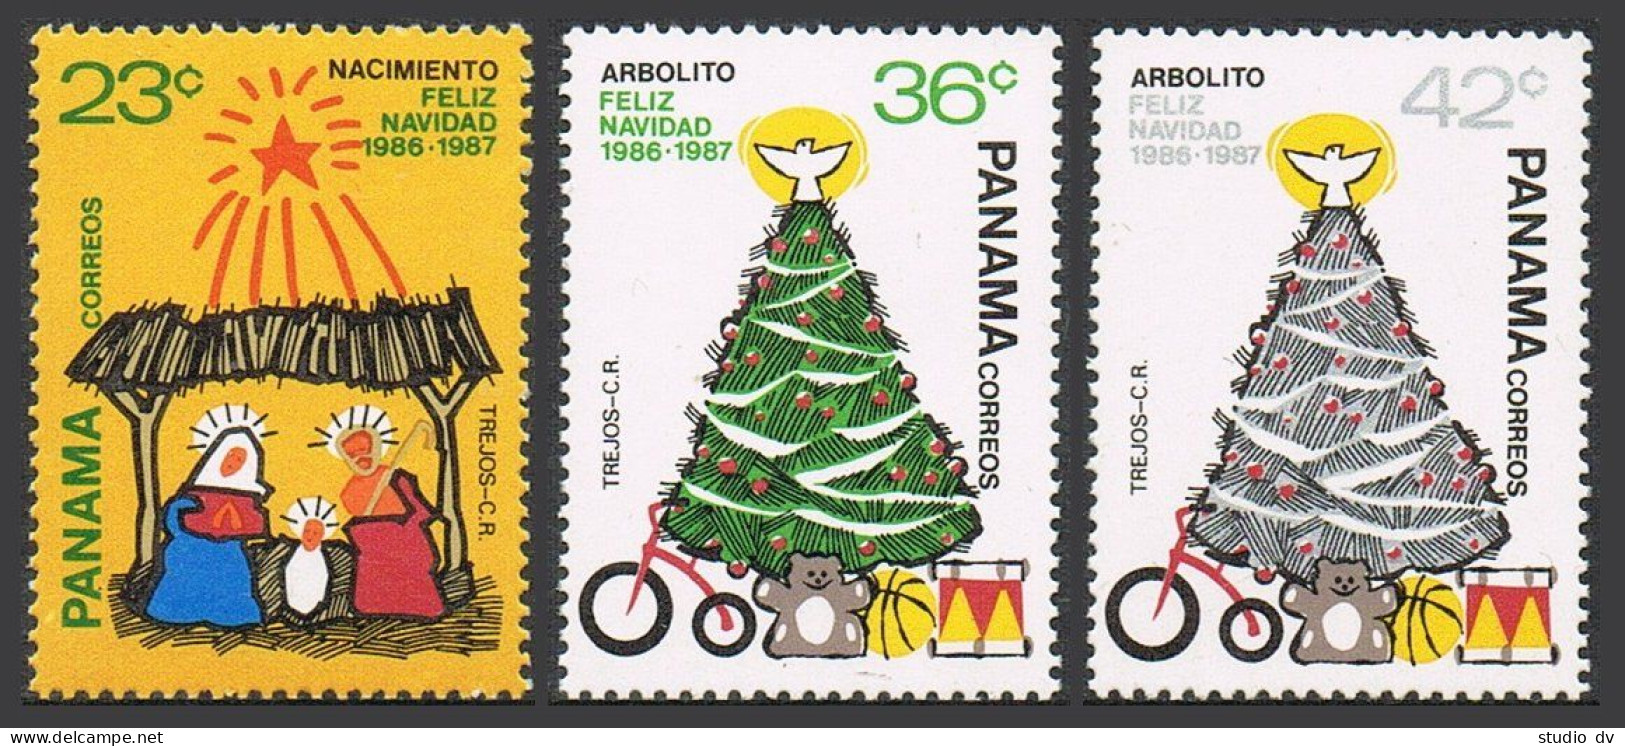 Panama 701-703, MNH. Mi 1630-1632. Christmas 1986. Nativity, Green,silver Trees. - Panamá